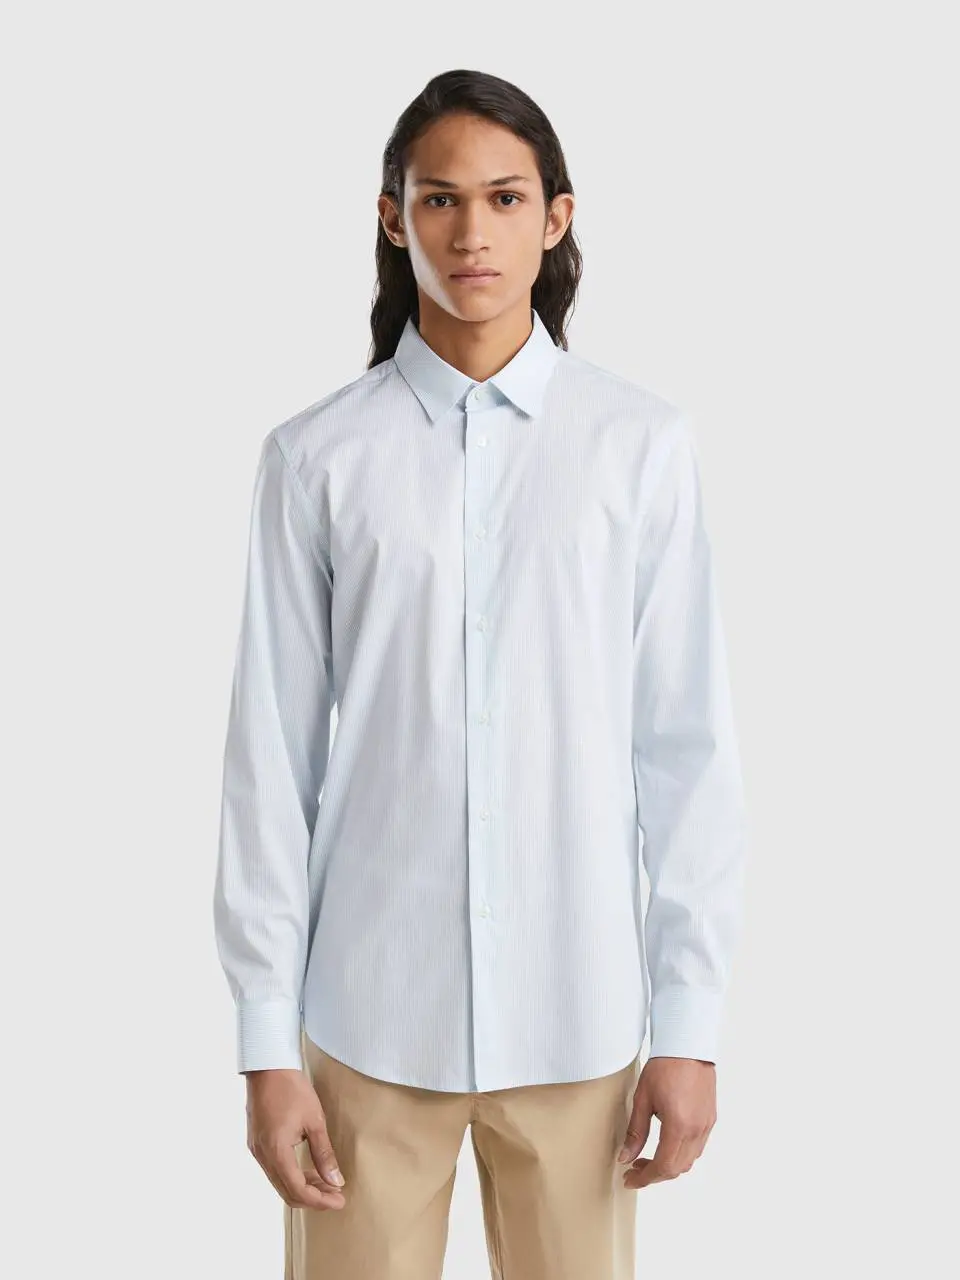 Benetton slim fit shirt in stretch cotton blend. 1